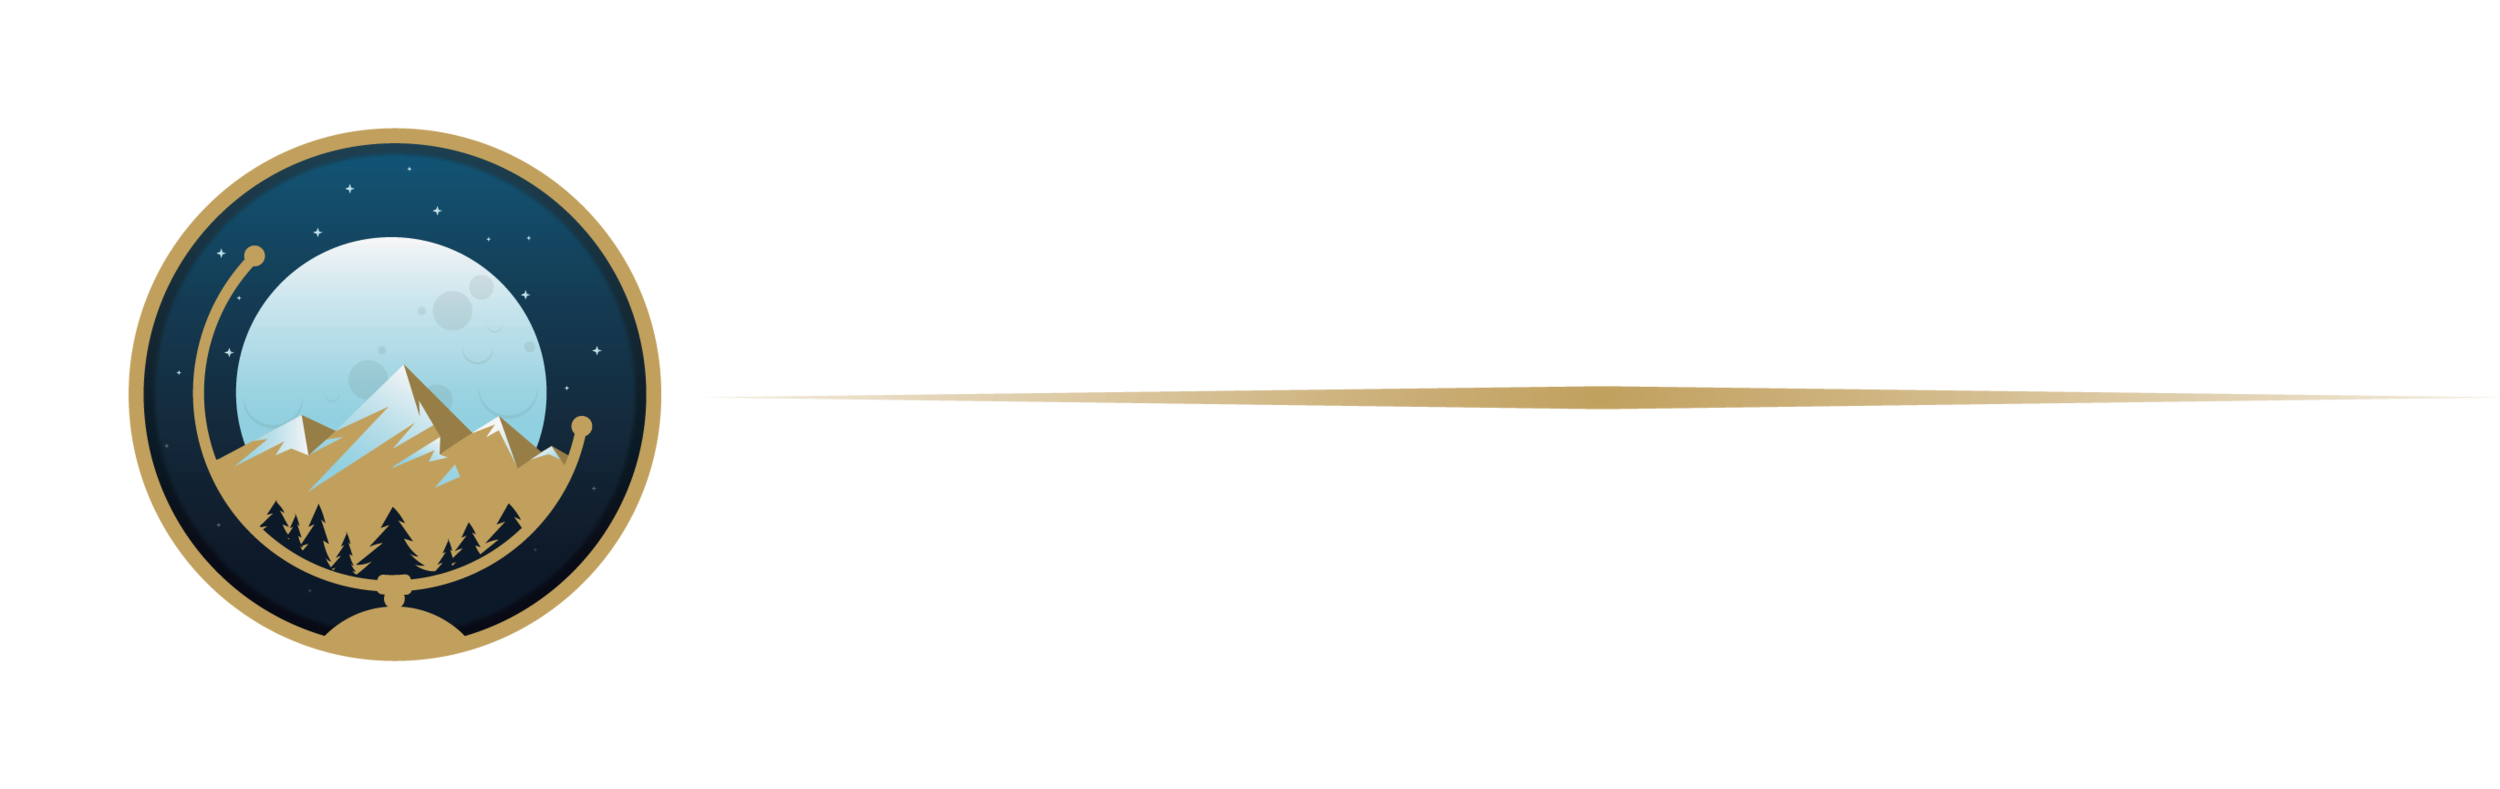 One Lifetime Tours